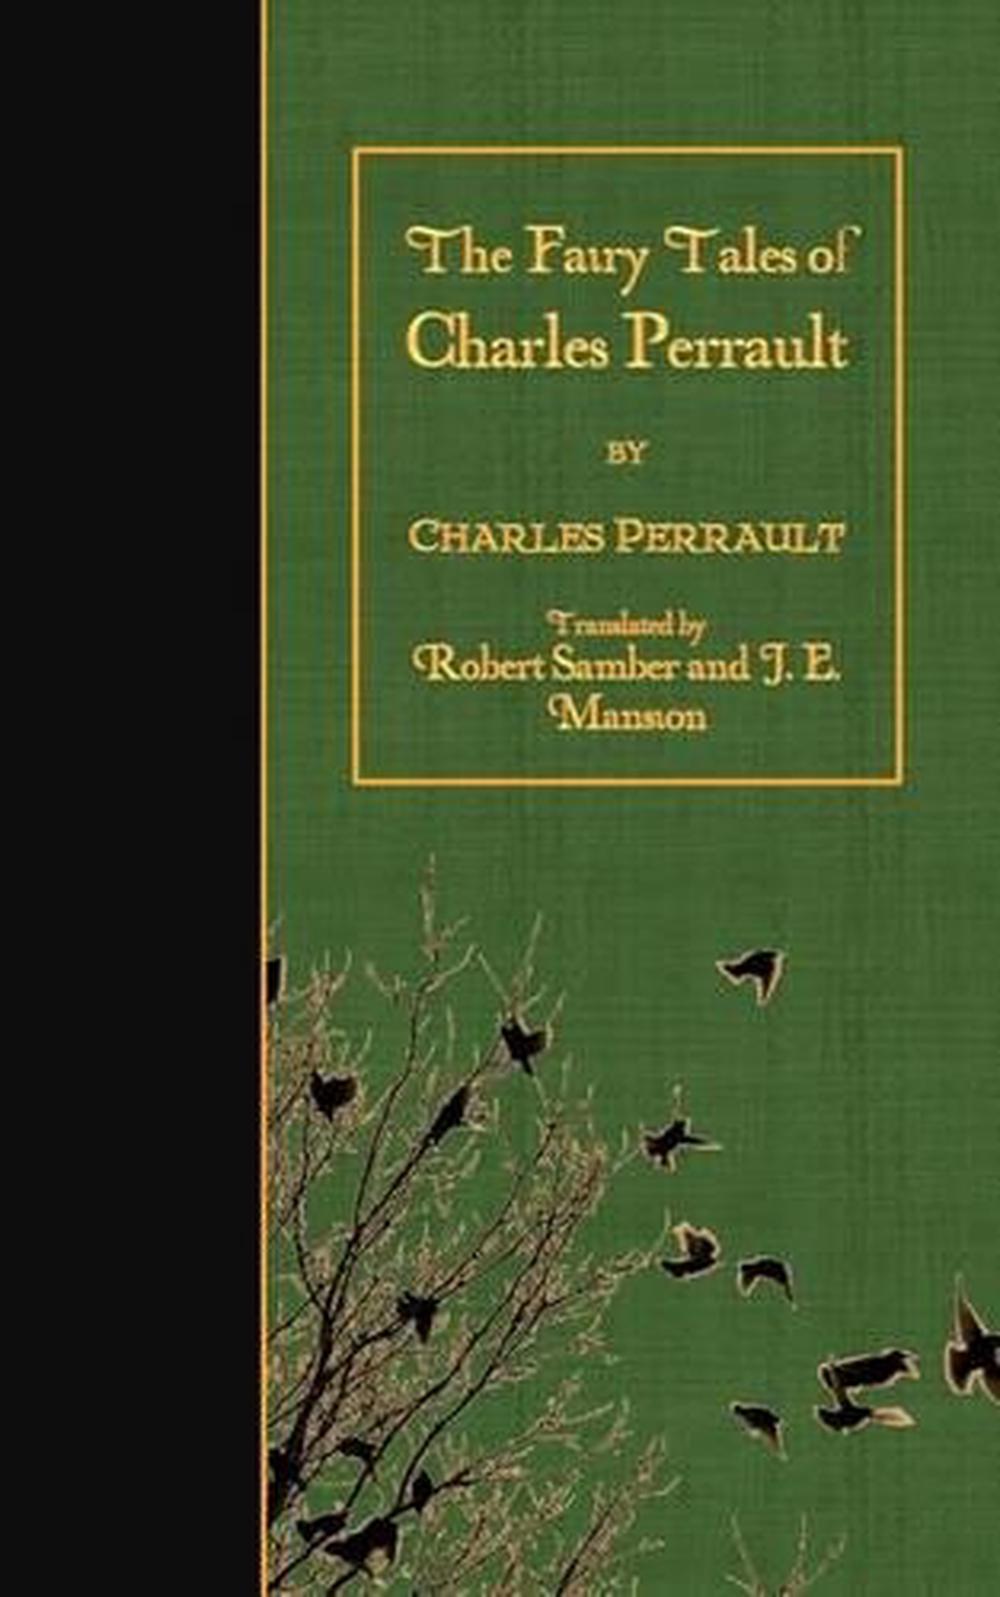 the fairytale of charles perrault